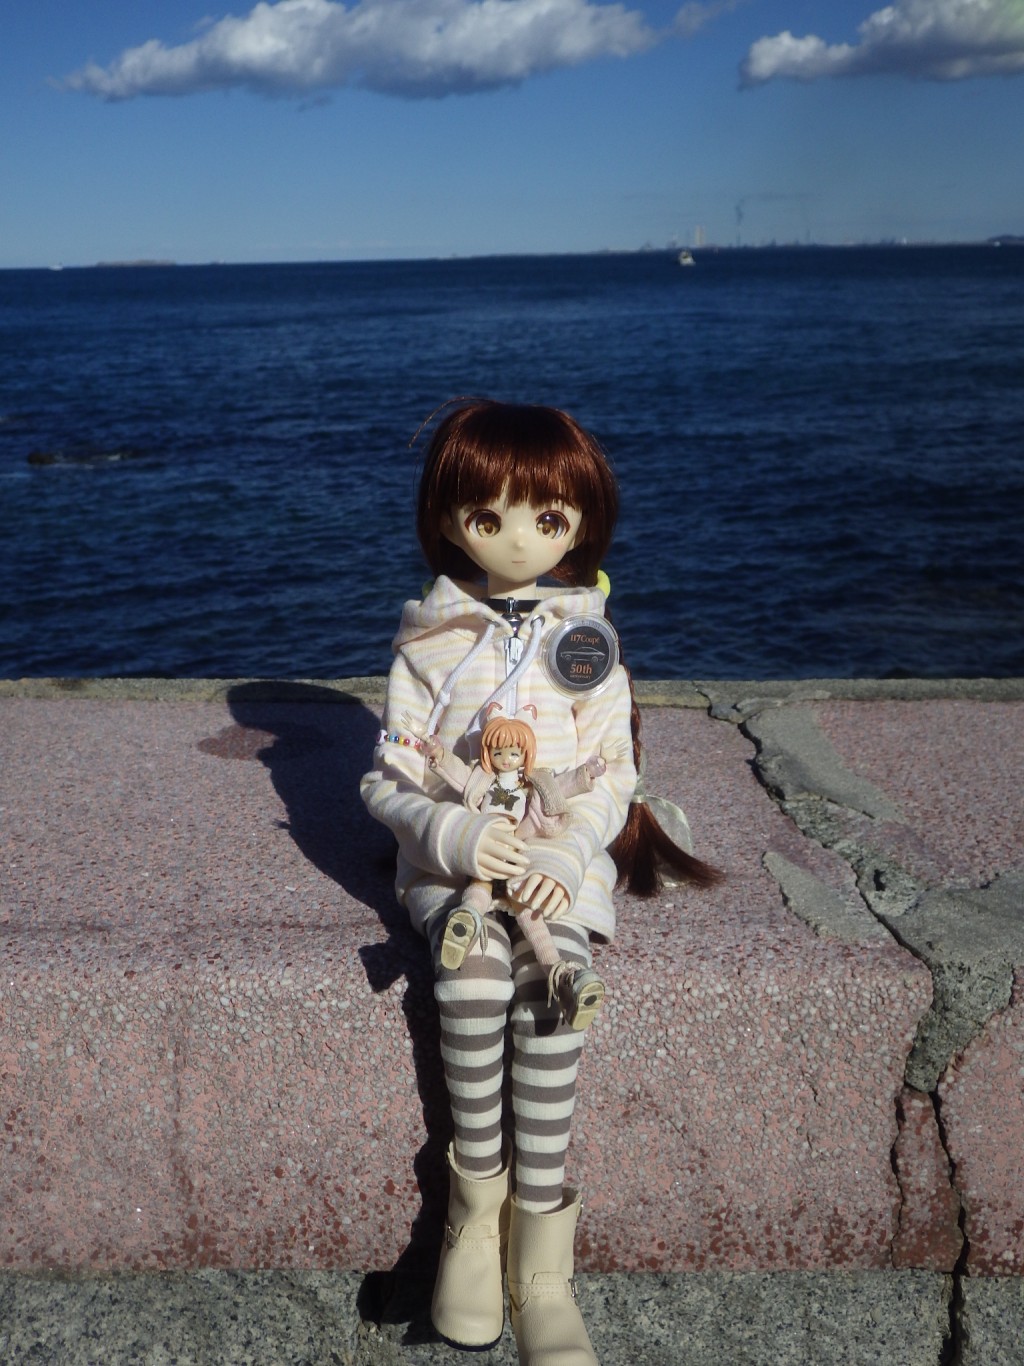 Ui與Nana在海邊合照。X